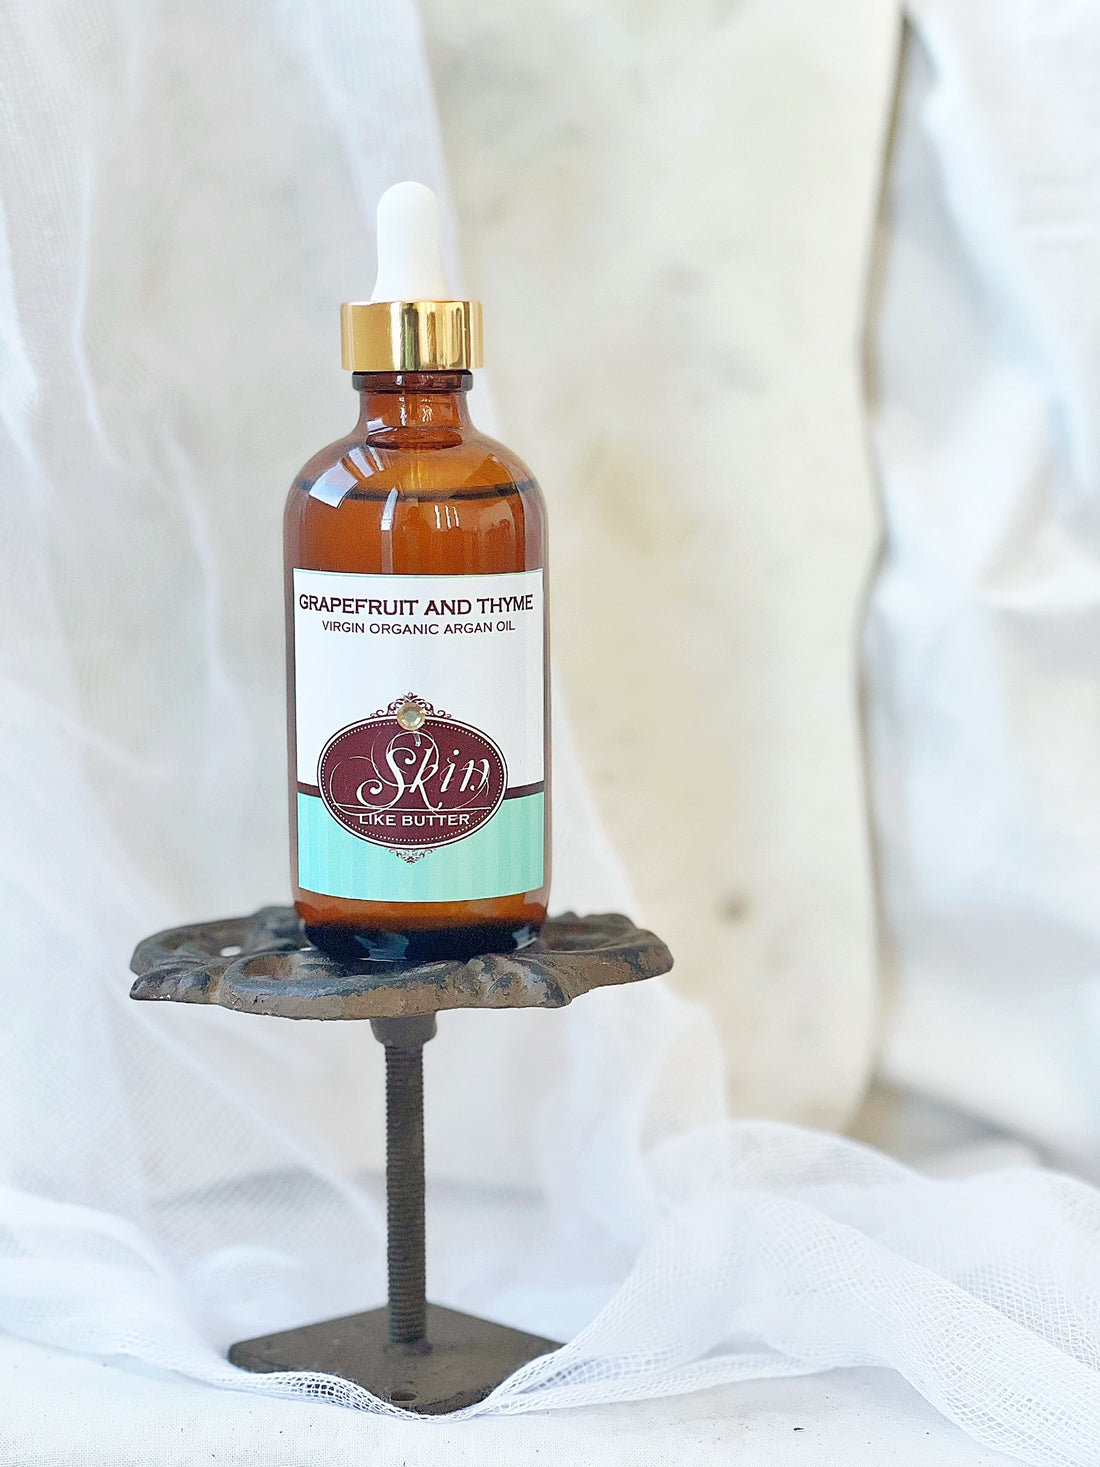 GRAPEFRUIT AND THYME -Shea Body Oil - 4 oz amber bottles, highly moisturizing